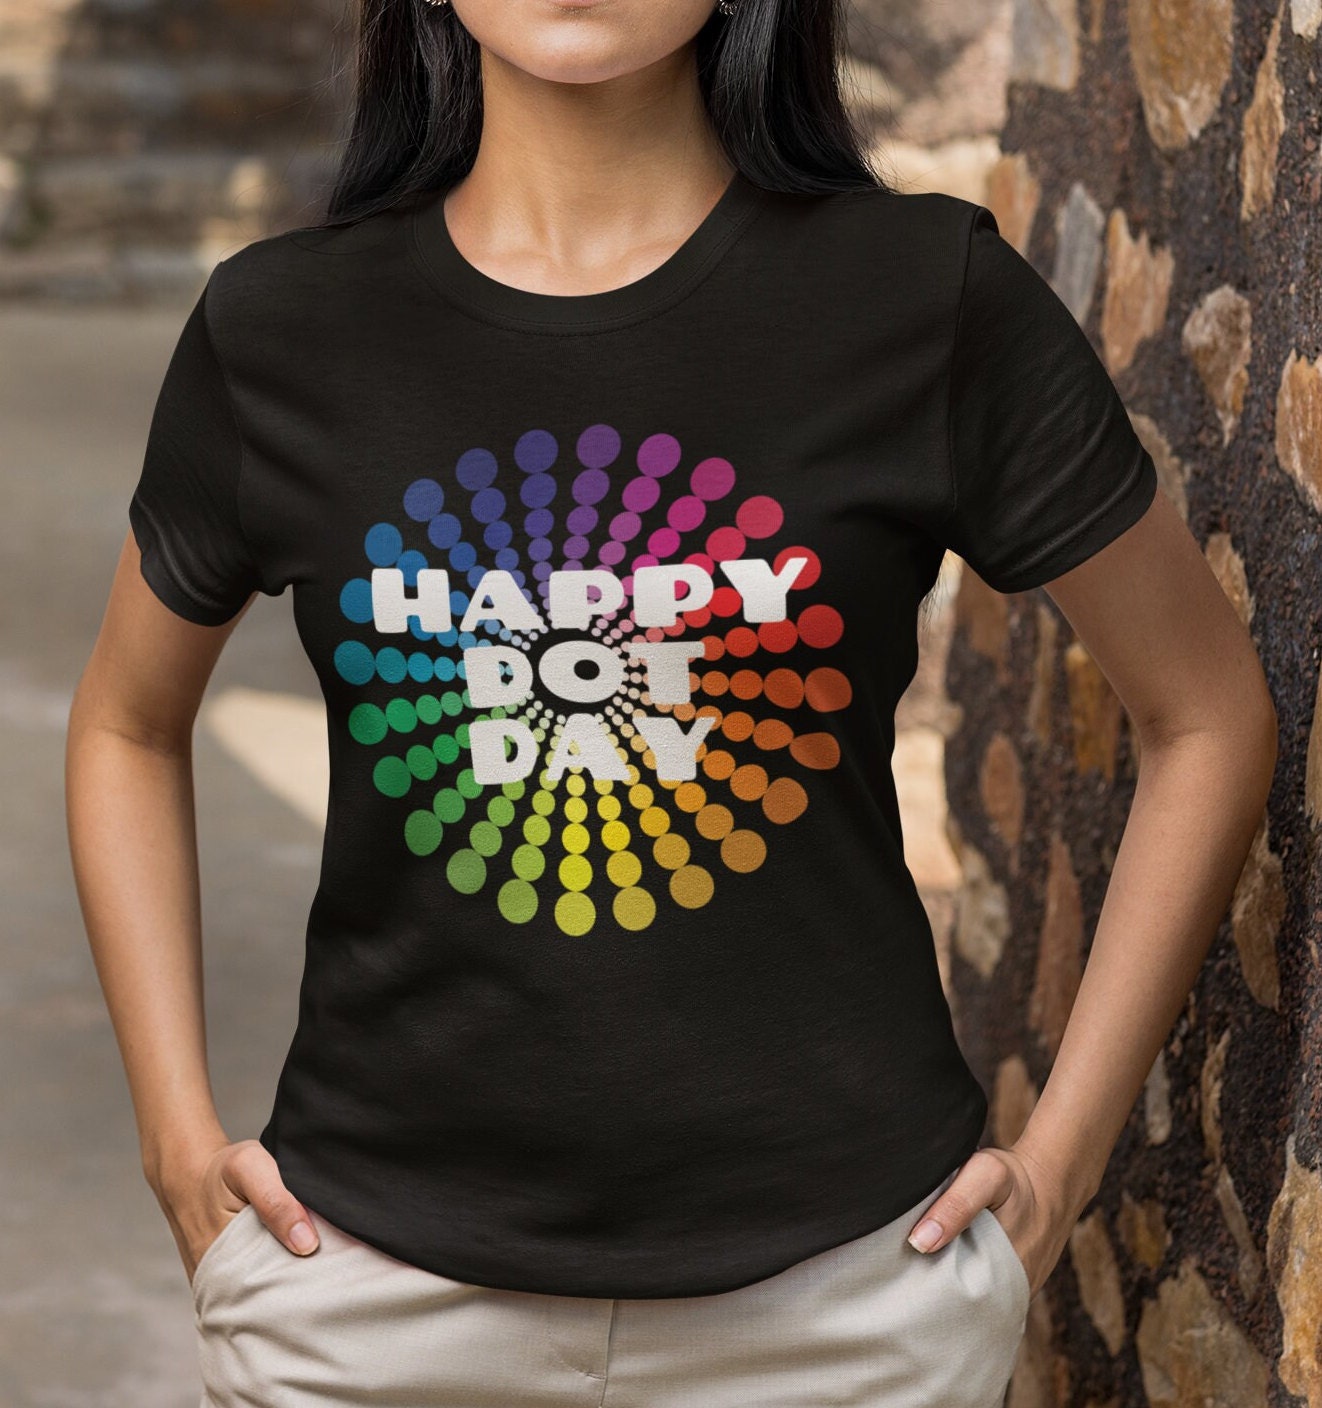  Dot Day Shirts for Boys, Polka Dot T-Shirt : Clothing, Shoes &  Jewelry